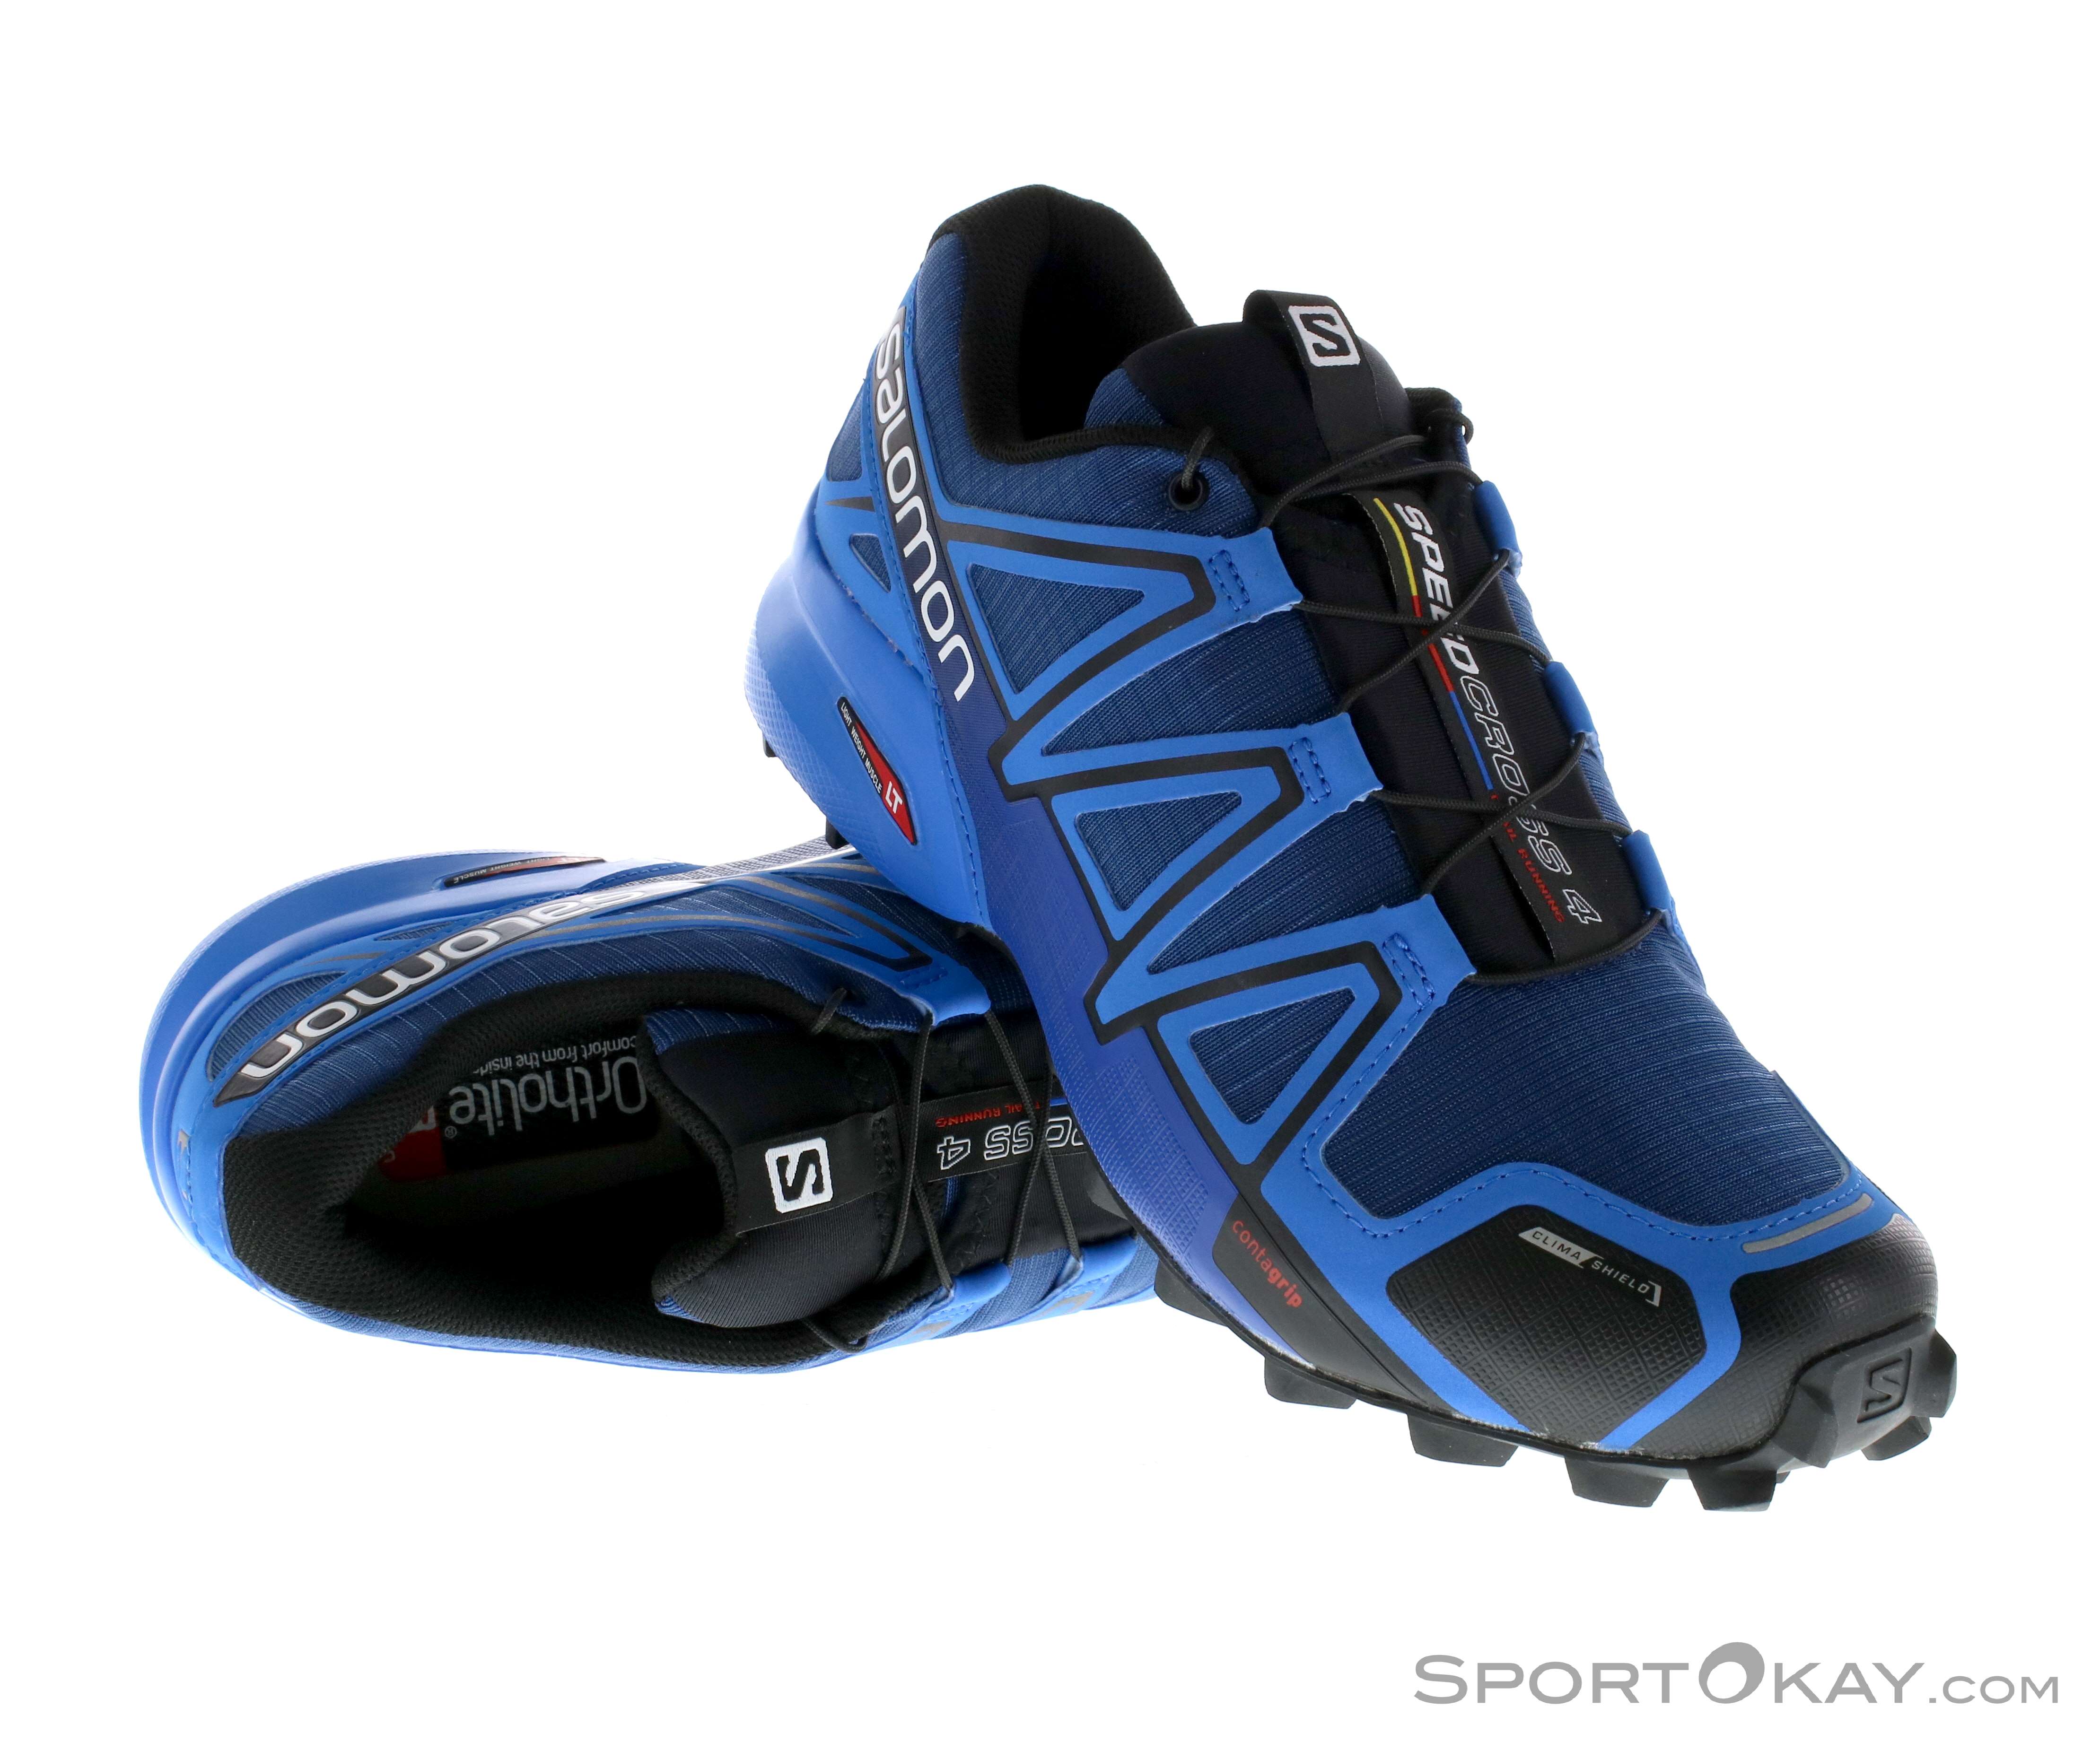 Salomon Speedcross 4 Mens Trail Running Shoes - Trail Running Shoes - Shoes Running - All